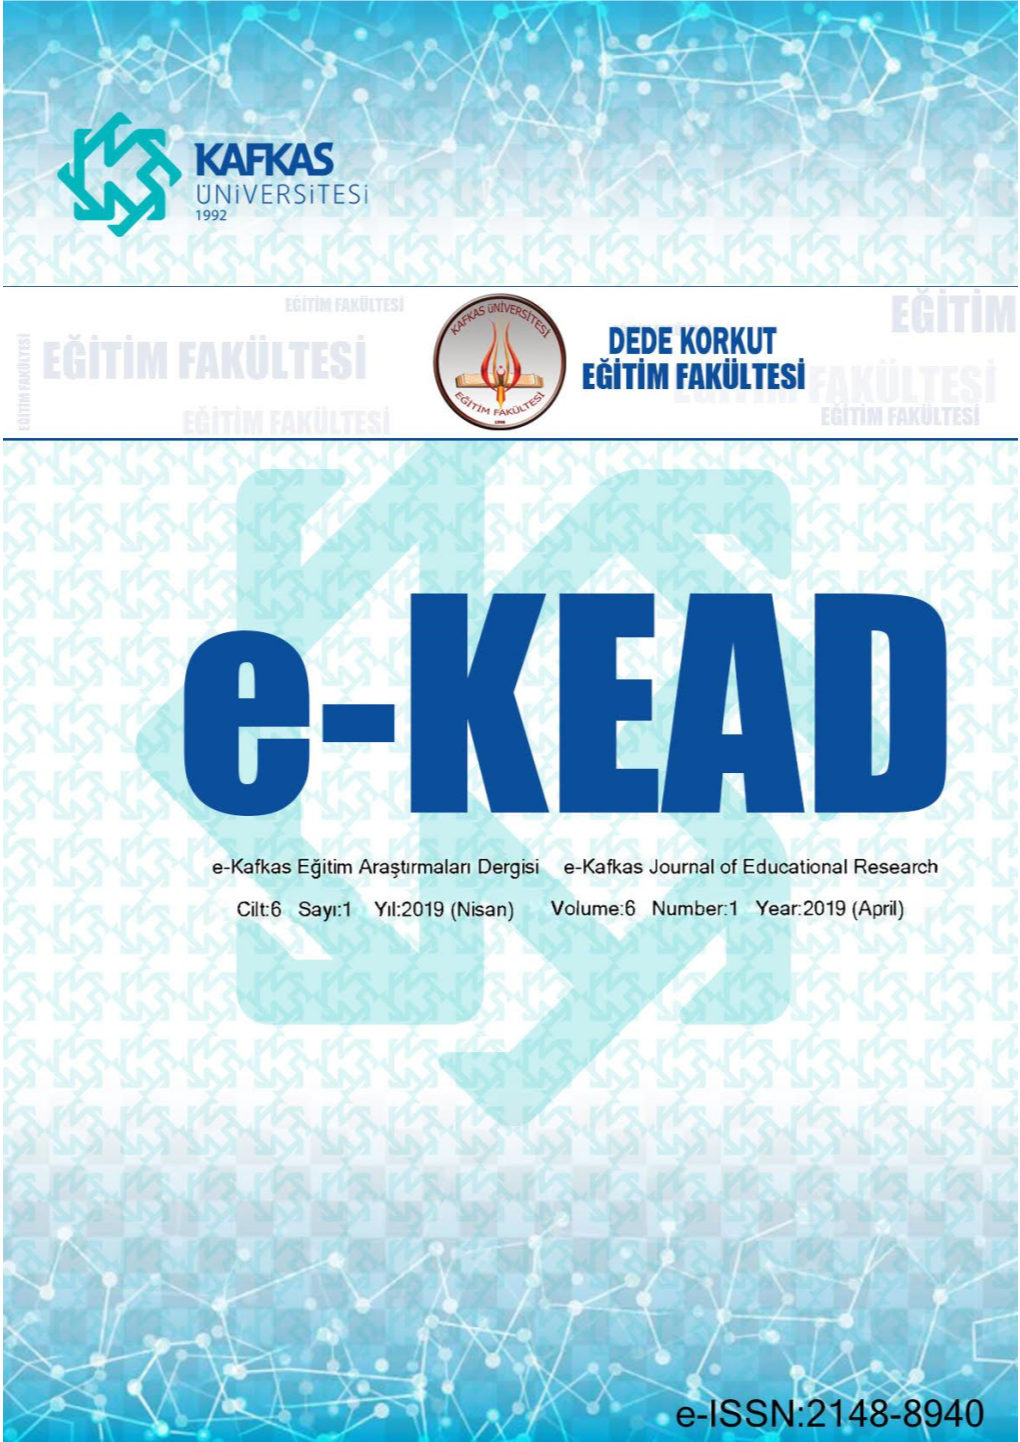 Cilt 6, Sayı 1, Nisan 2019 E-Kafkas Journal of Educational Research Volume 6, Number 1, April 2019